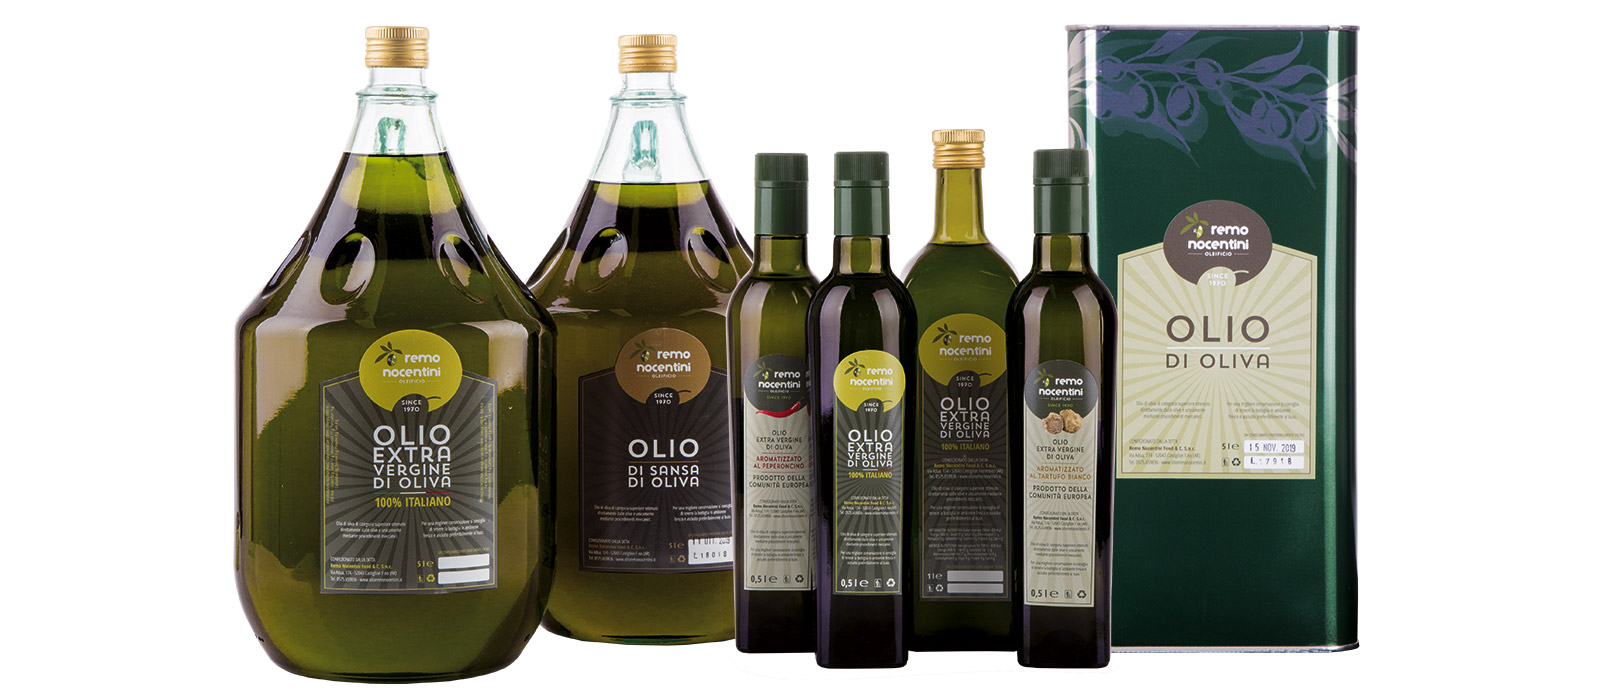 Oleificio Remo Nocentini – Olio di oliva, extravergine d'oliva italiano, oli aromatizzati